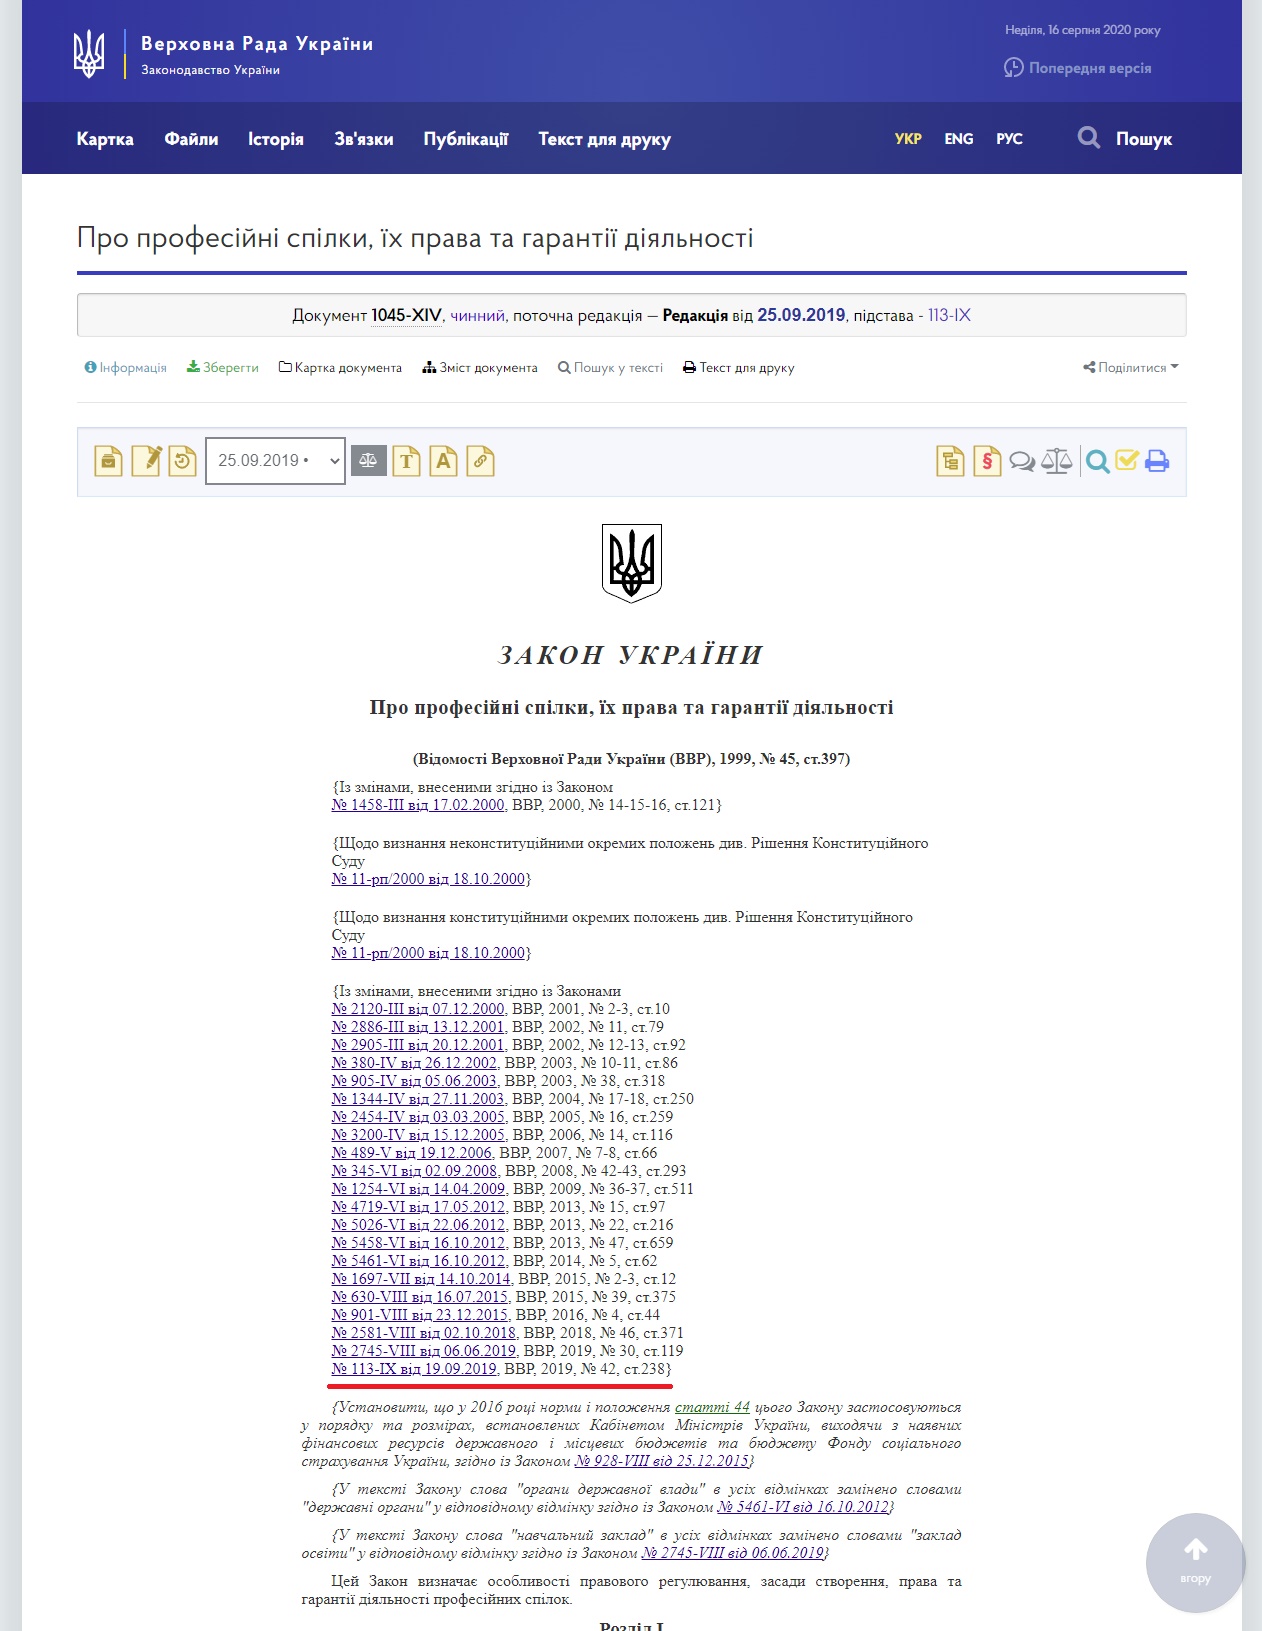 https://zakon.rada.gov.ua/laws/show/1045-14#Text